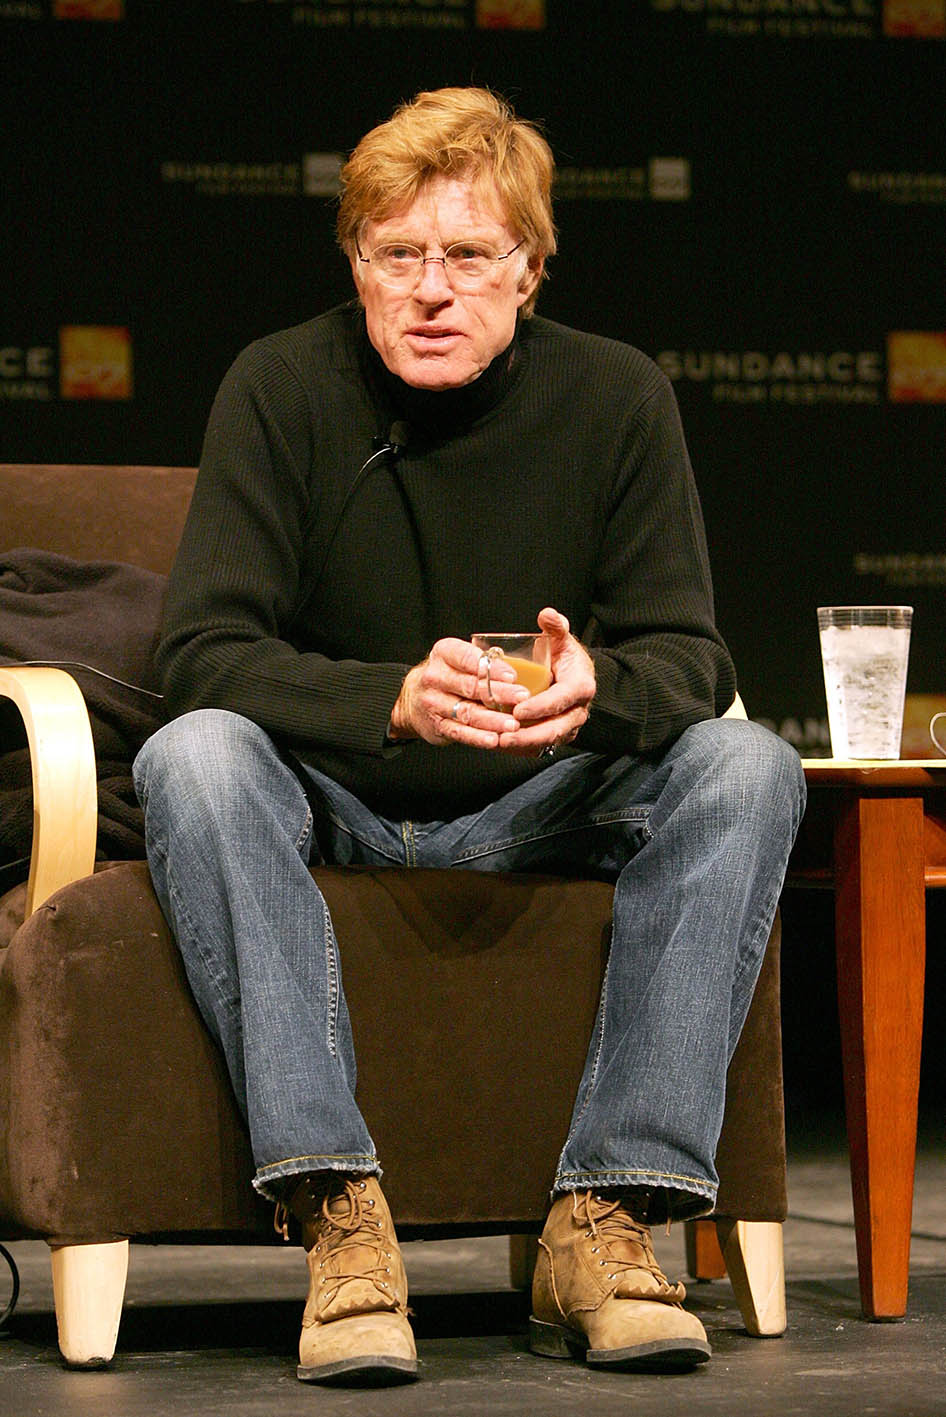 O ιδρυτής του Κινηματογραφικού Sundance Festival, Robert Redford απευθύνεται στους δημοσιογράφους στην πρώτη ημέρα του φεστιβάλ το 2007, στο Eygptian Theatre, Park City, Utah.